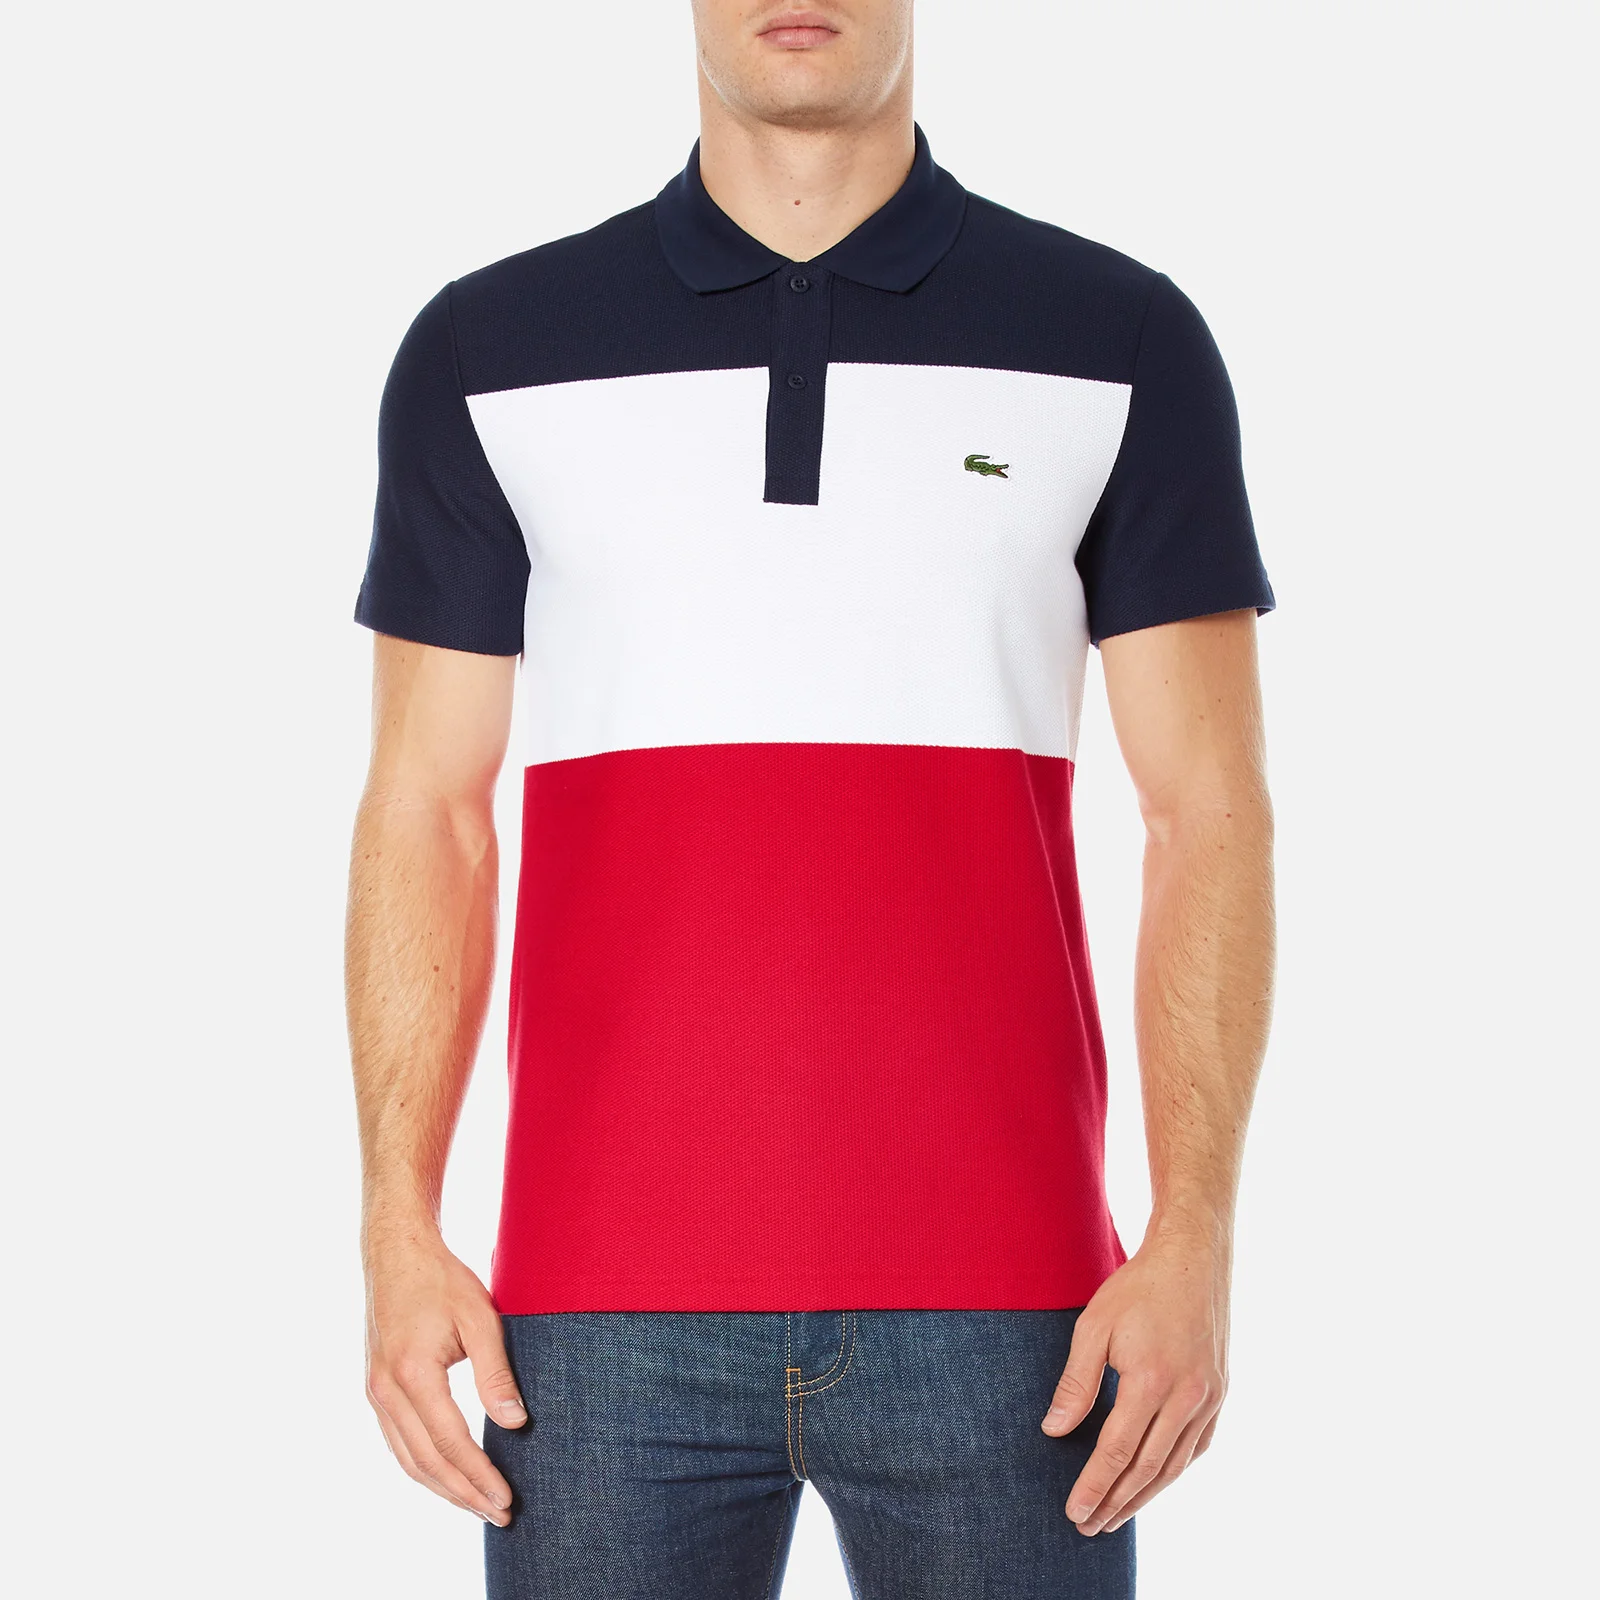 Lacoste Men's Short Sleeve Bold Stripe Polo Shirt - Navy Blue/White/Red Image 1